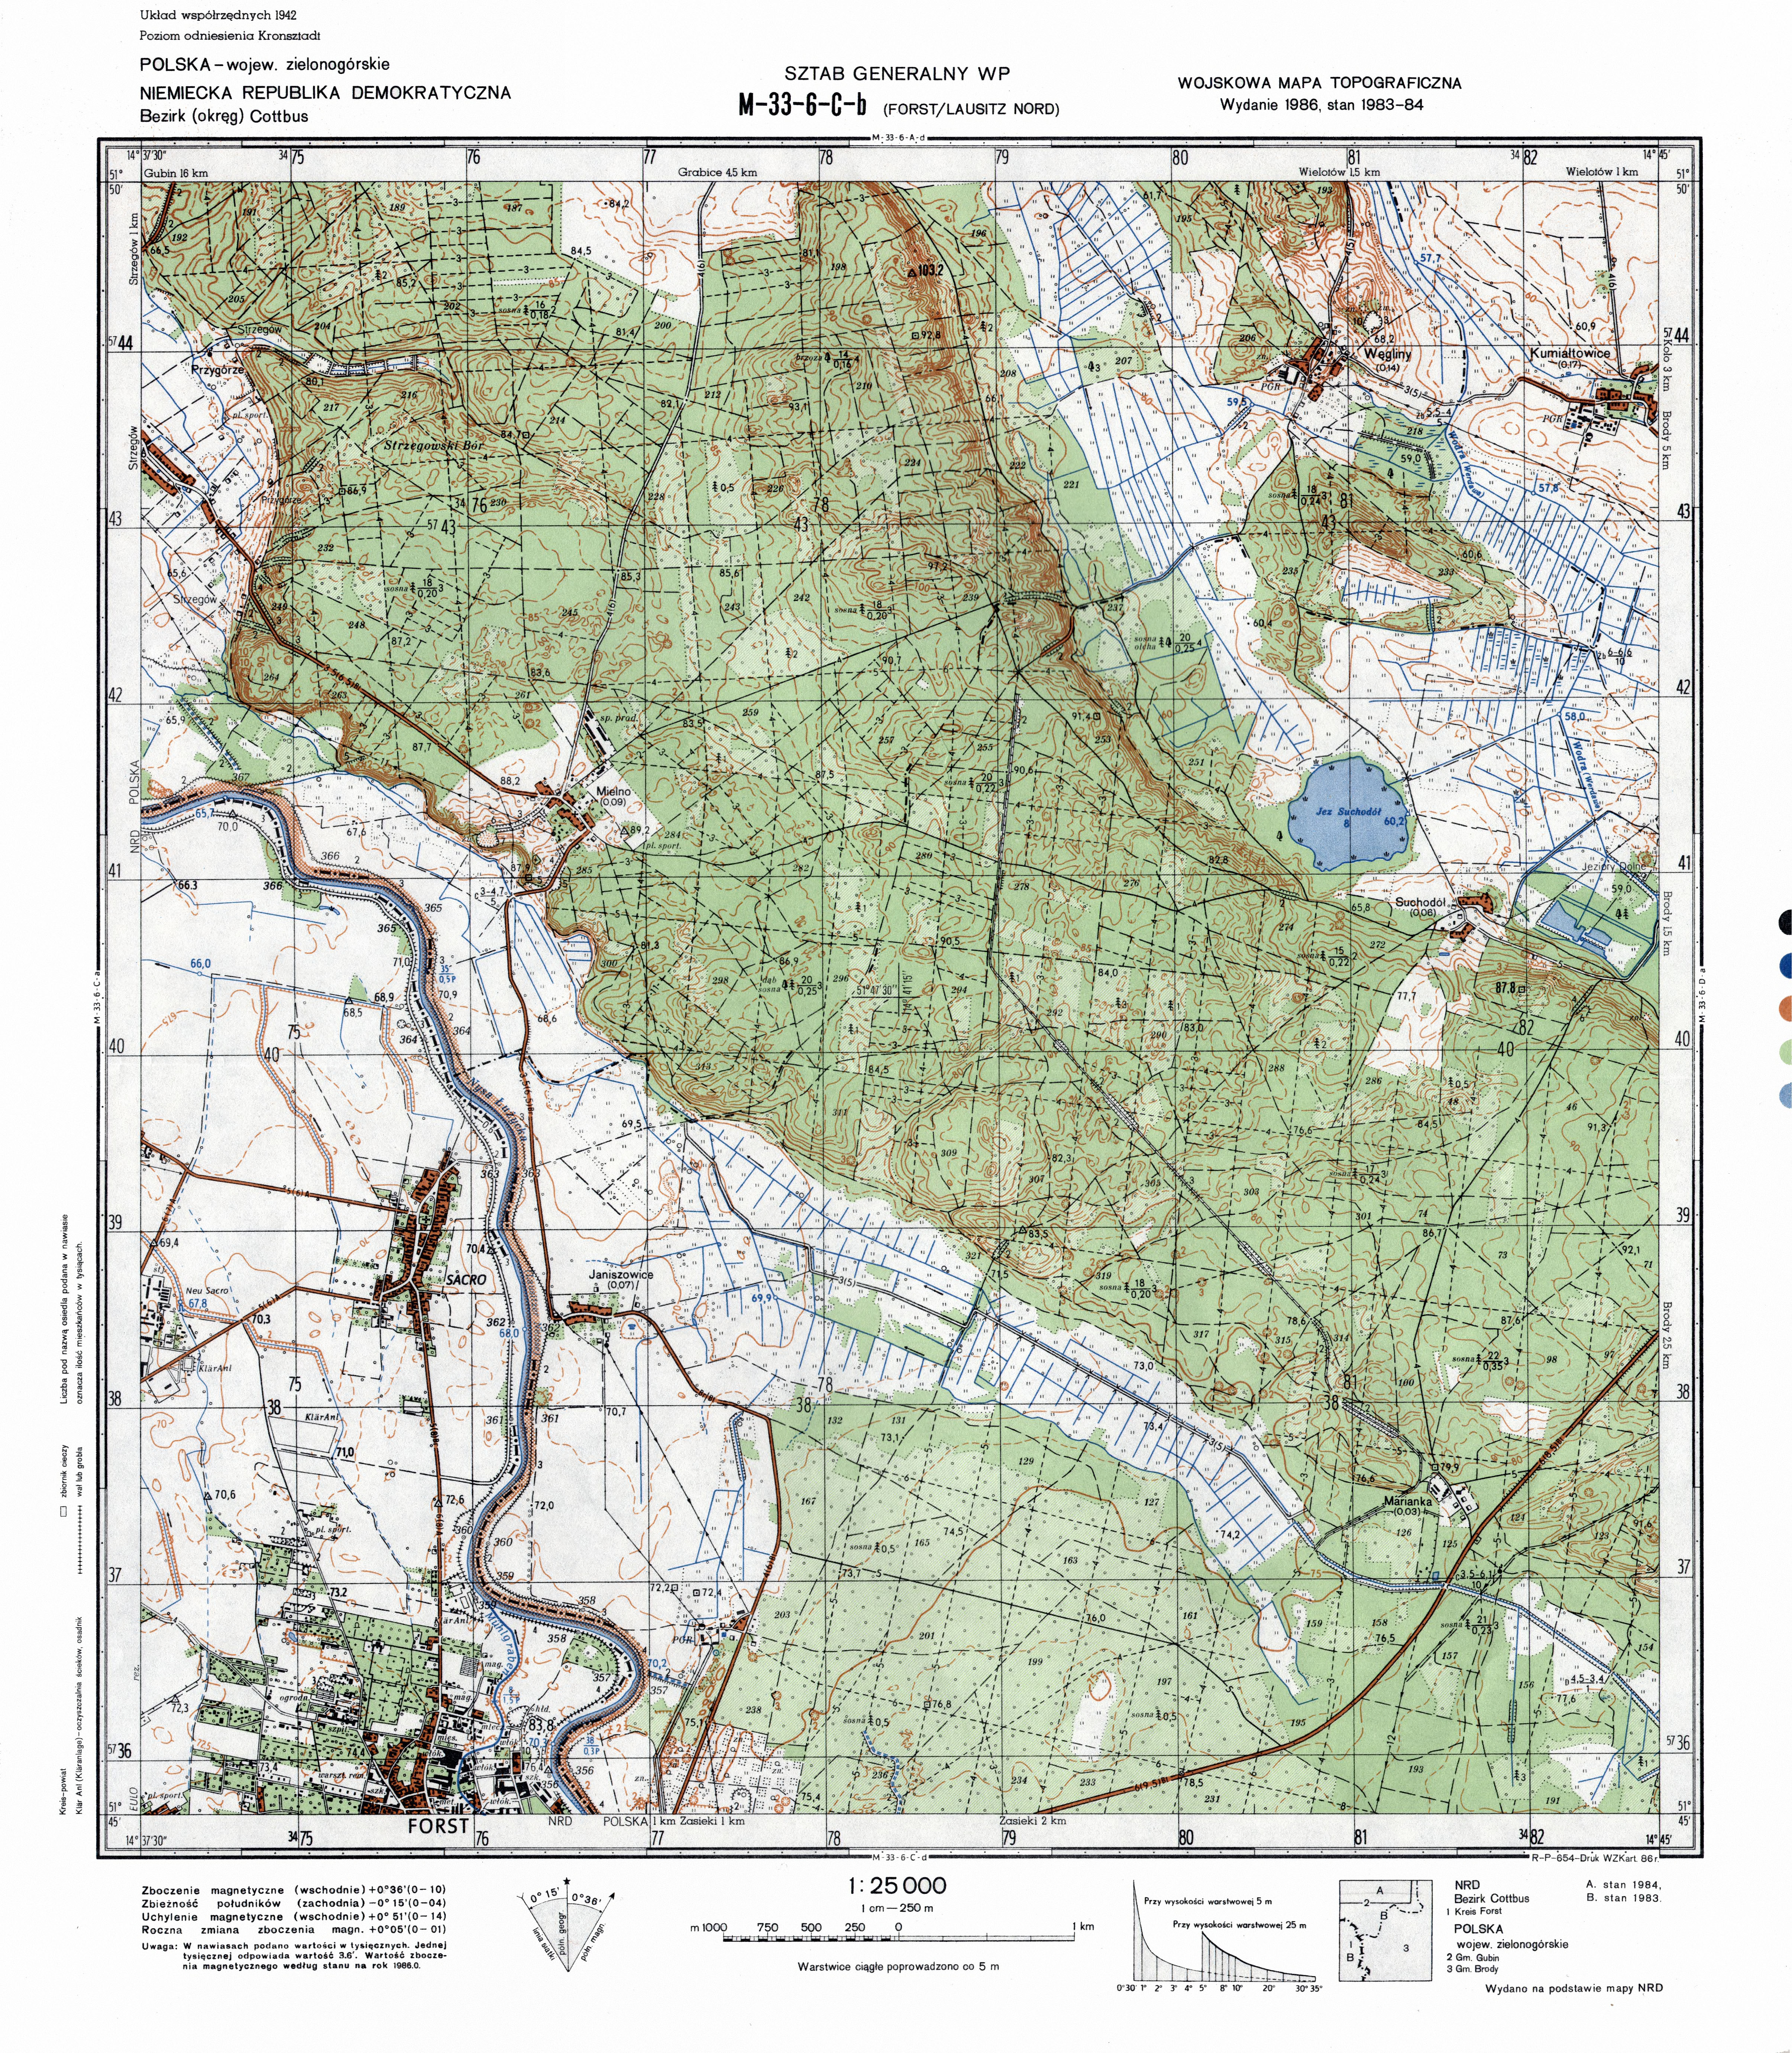 Mapy topograficzne LWP 1_25 000 - M-33-6-C-b_FORST_LAUSITZ_NORD_1986.jpg